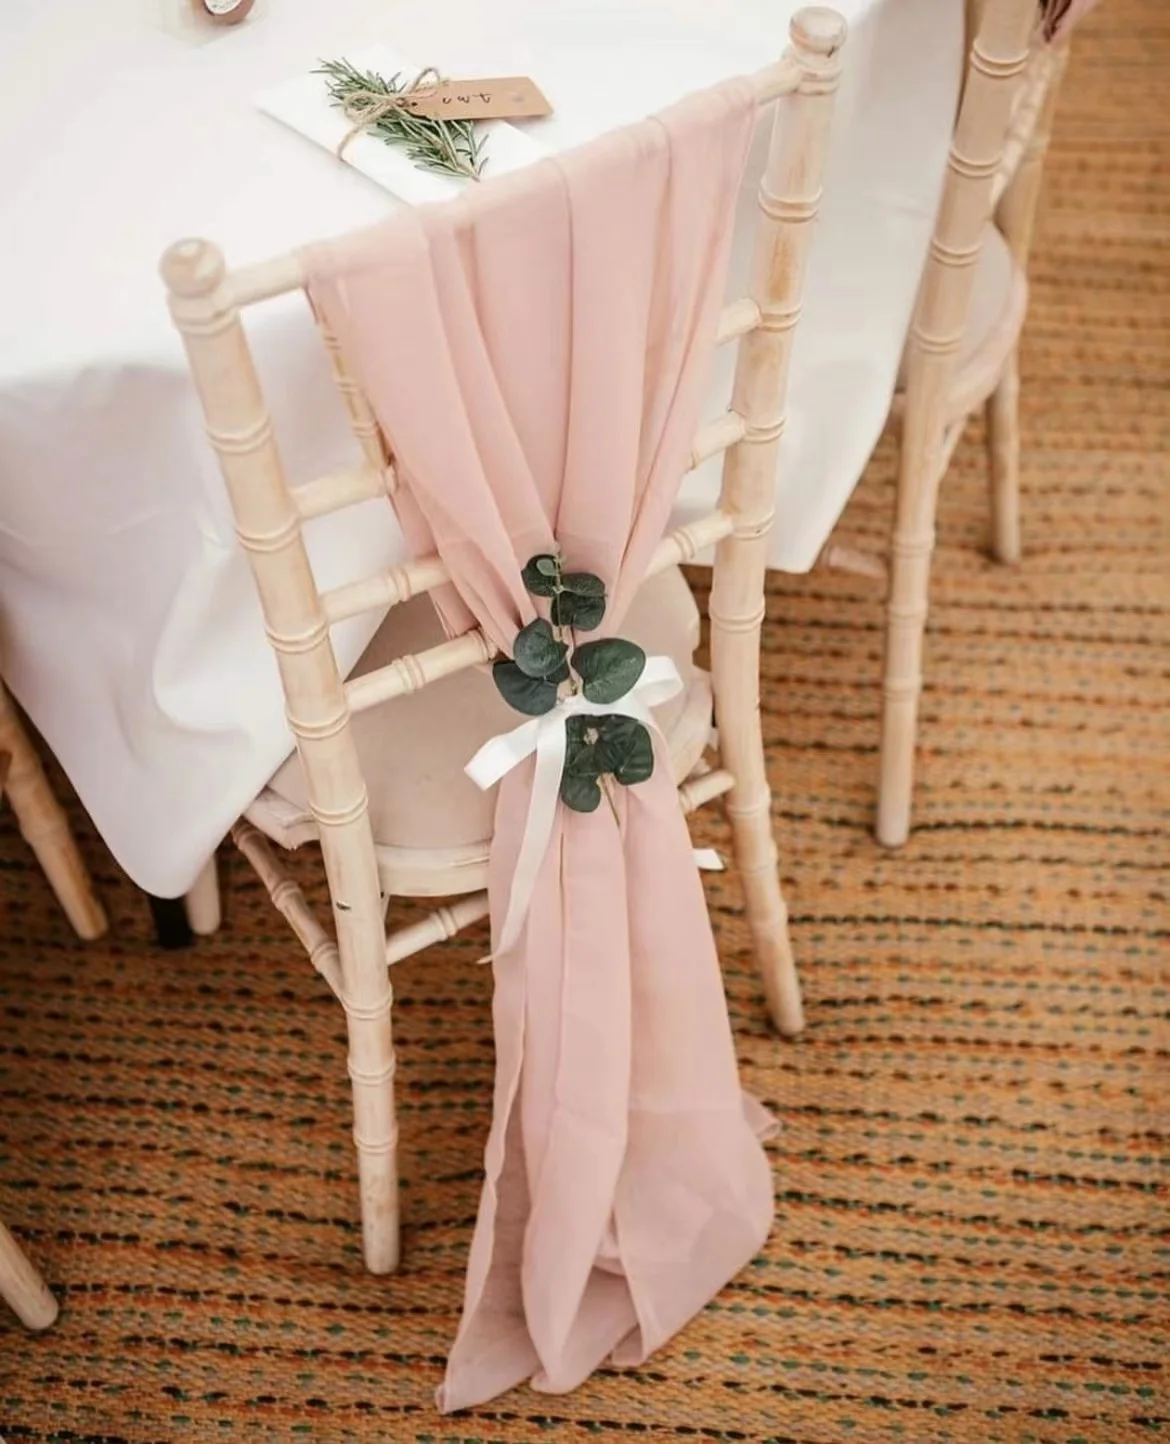 Manufacturer Wedding Chair Sashes Decor Chair Cover Sashes Wedding Decorative